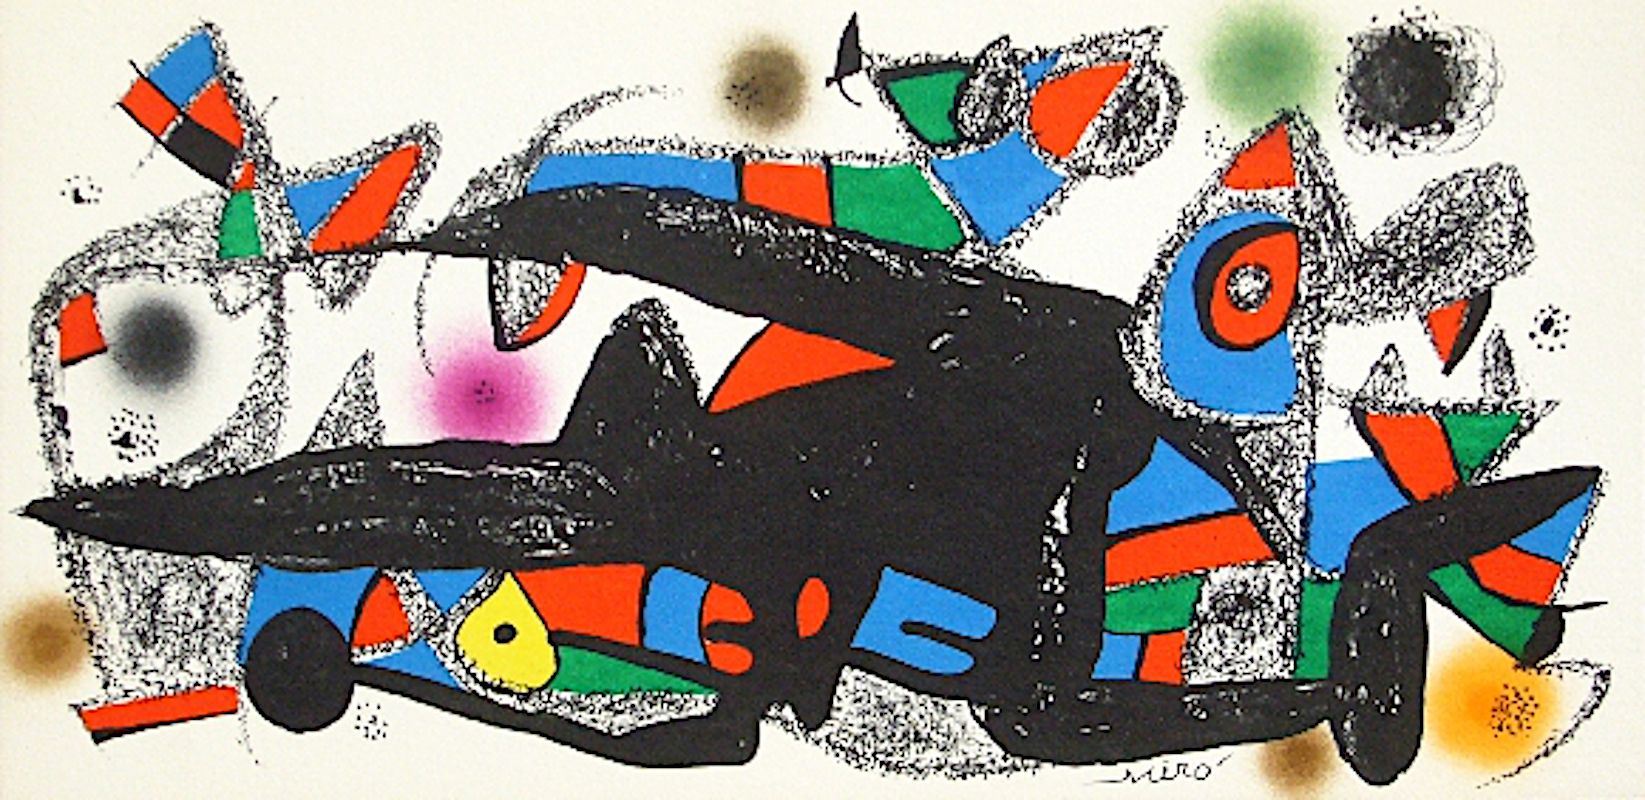 Joan Miro Joan MIRÓ

Mirò lo scultore, Danimarca, 1974

Litografia originale fir&hellip;